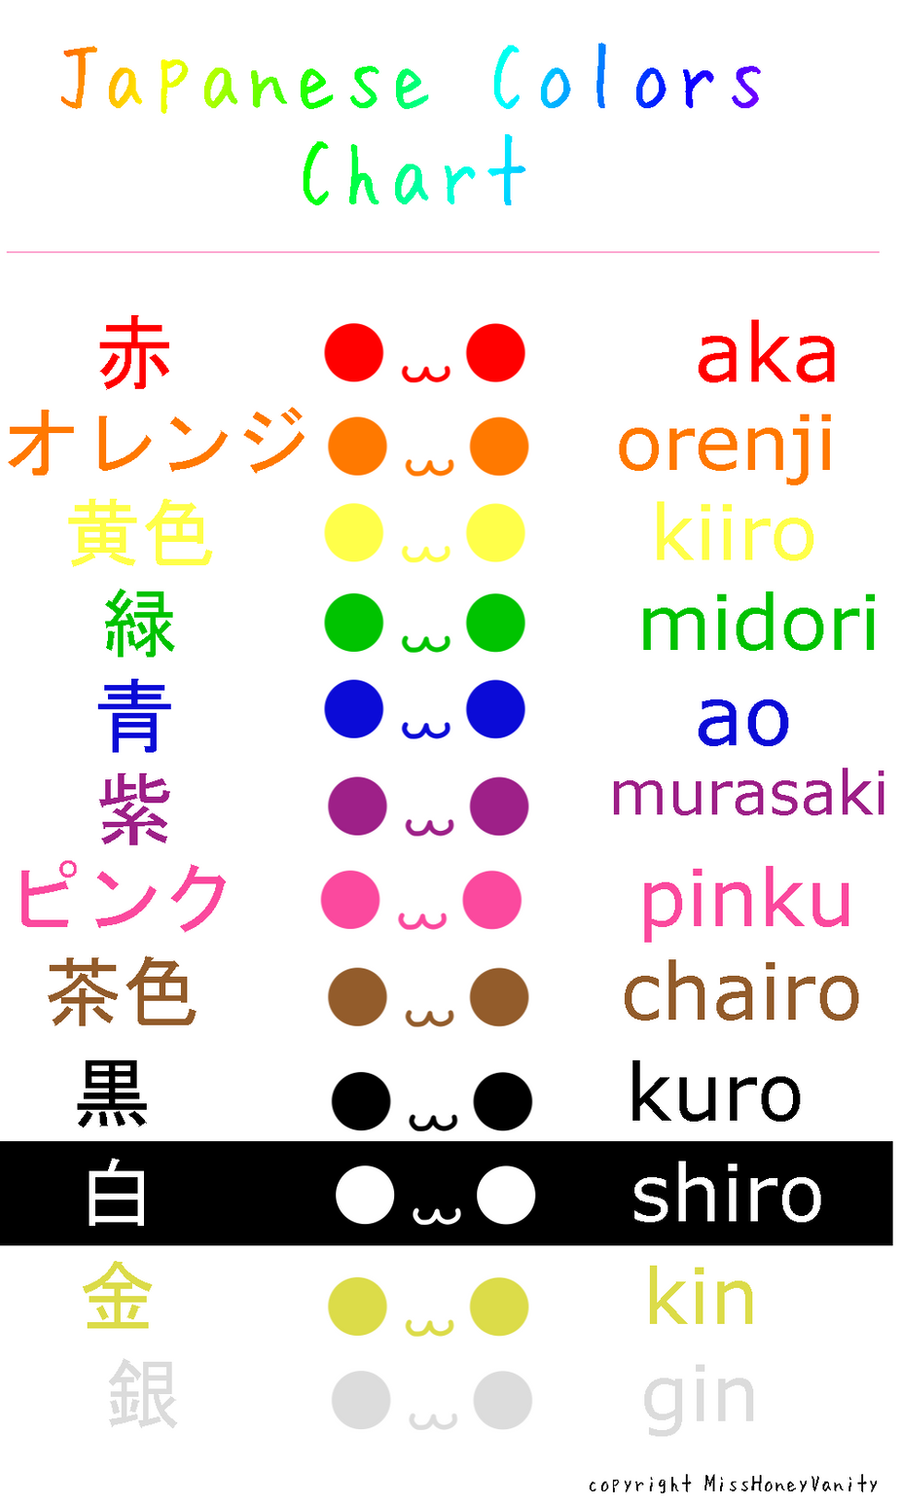 Learn Japanese: Colors by misshoneyvanity on DeviantArt